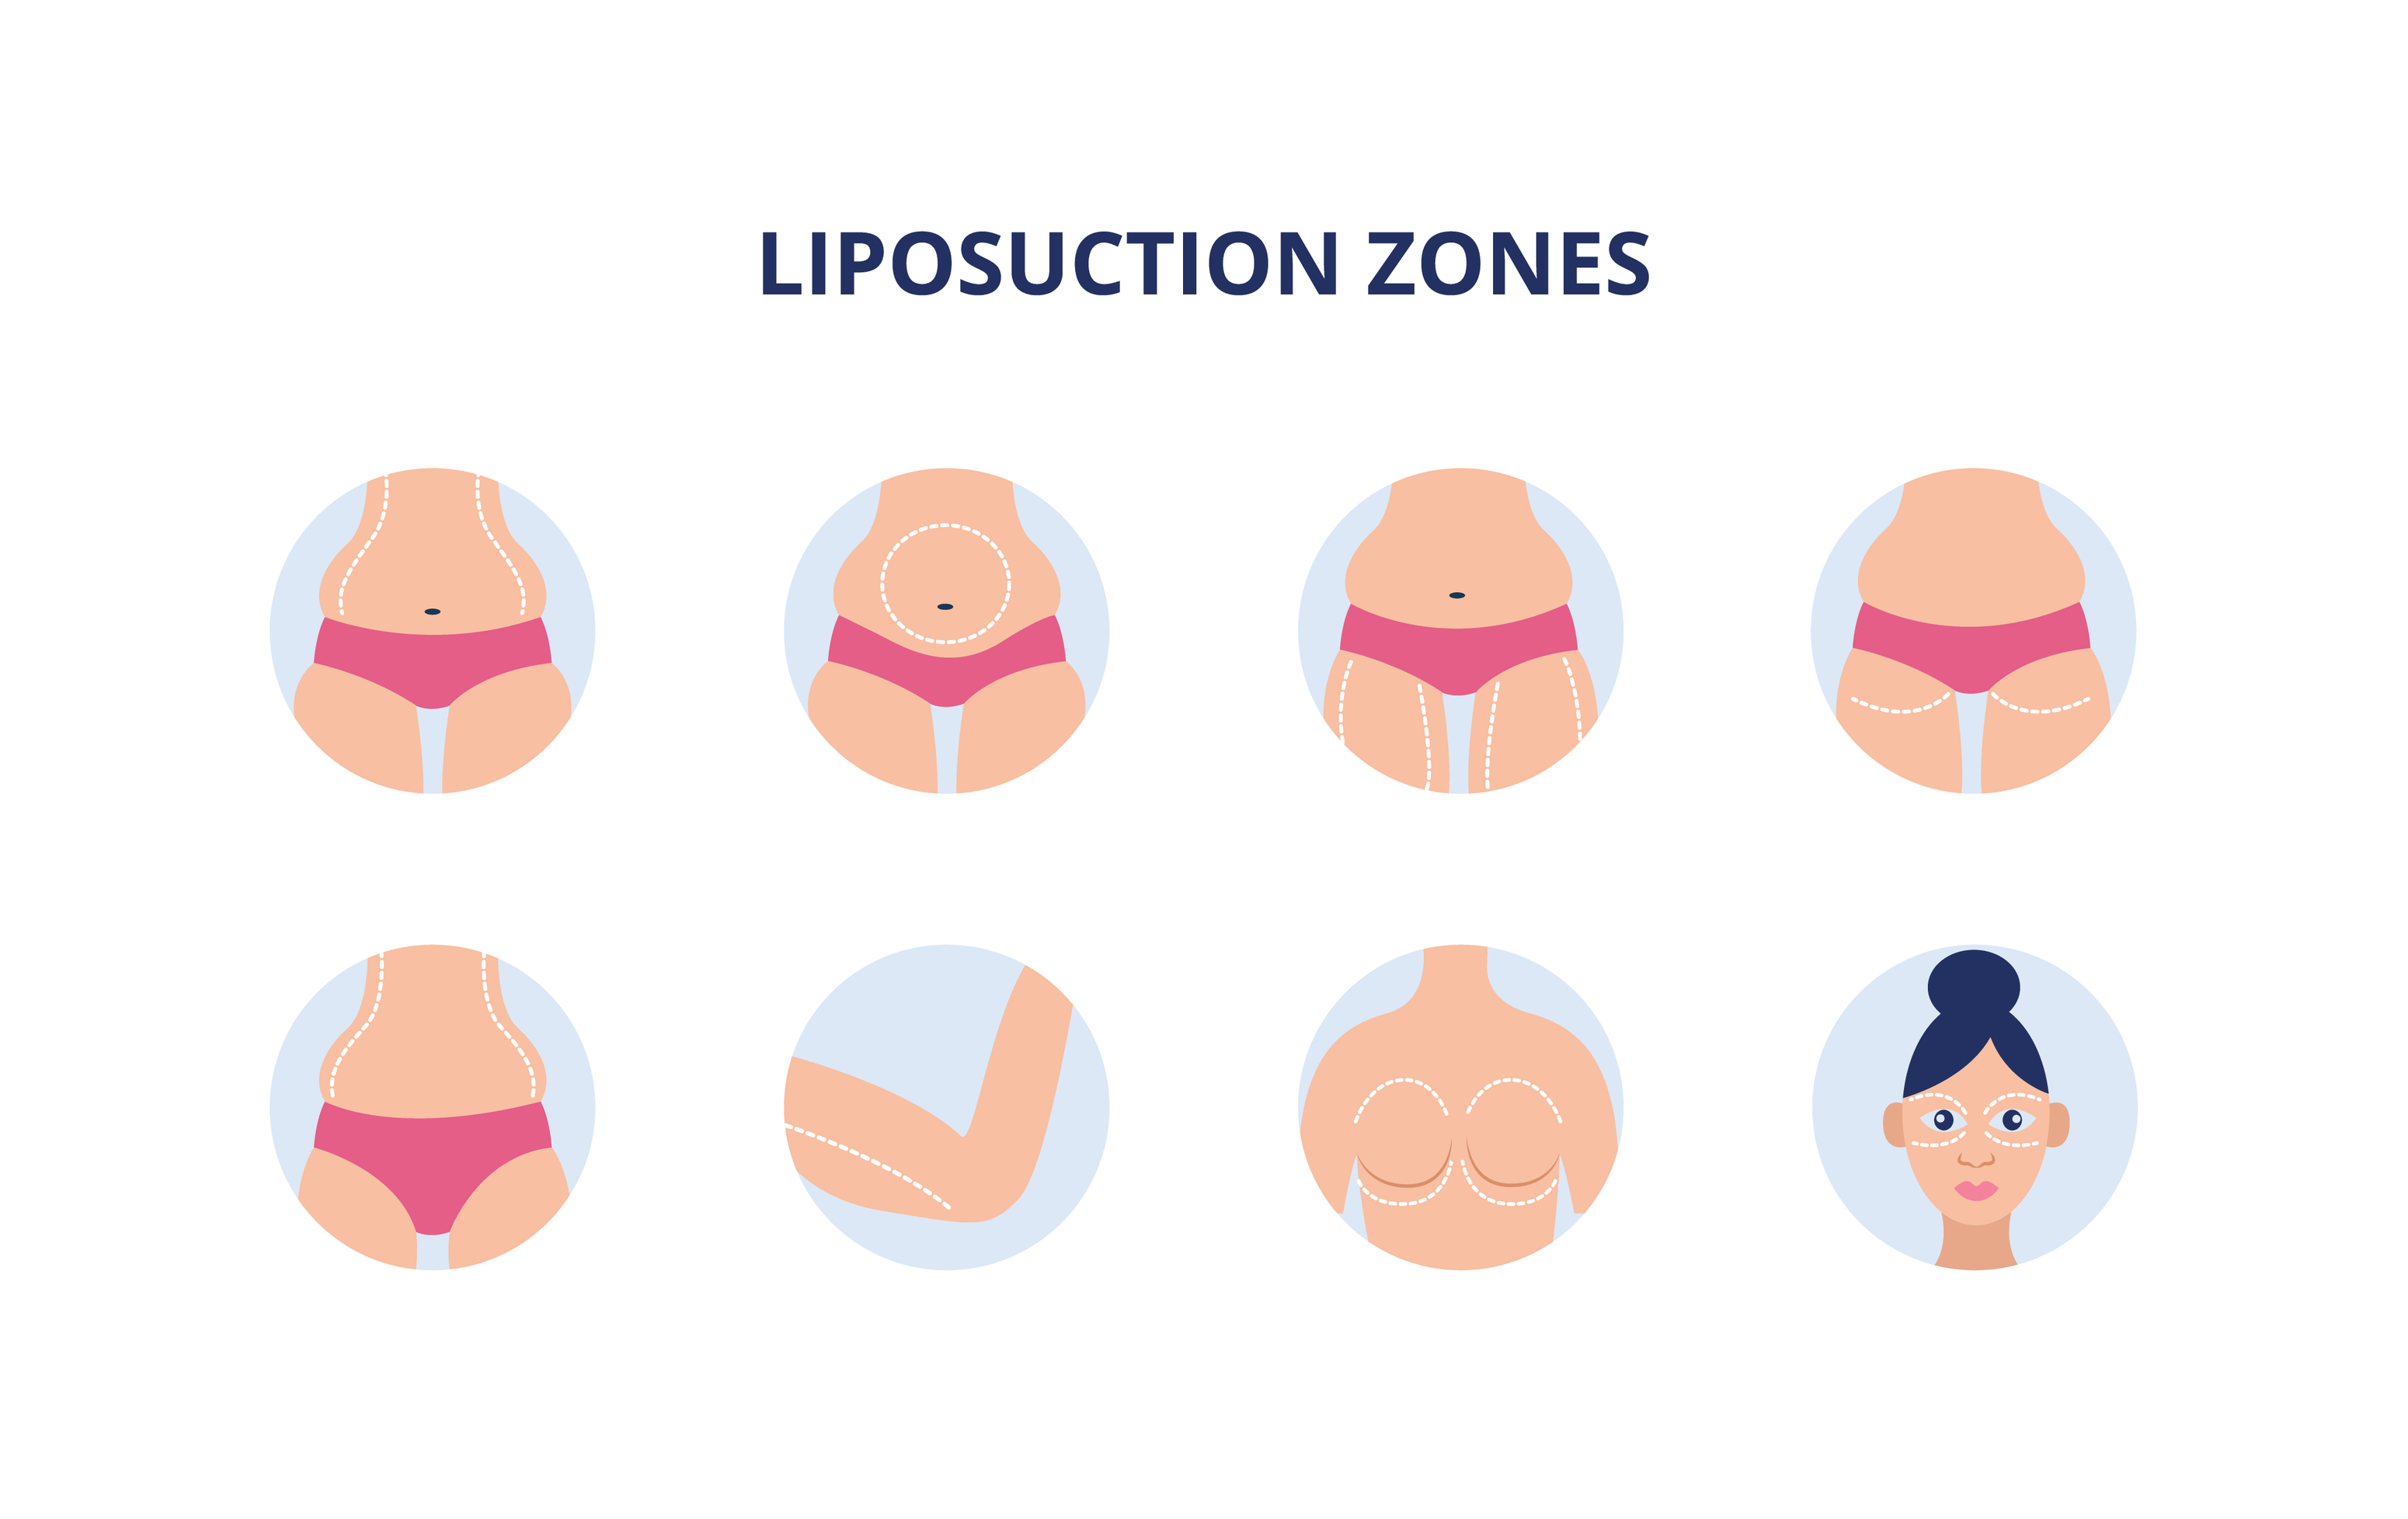 liposuction zones in body